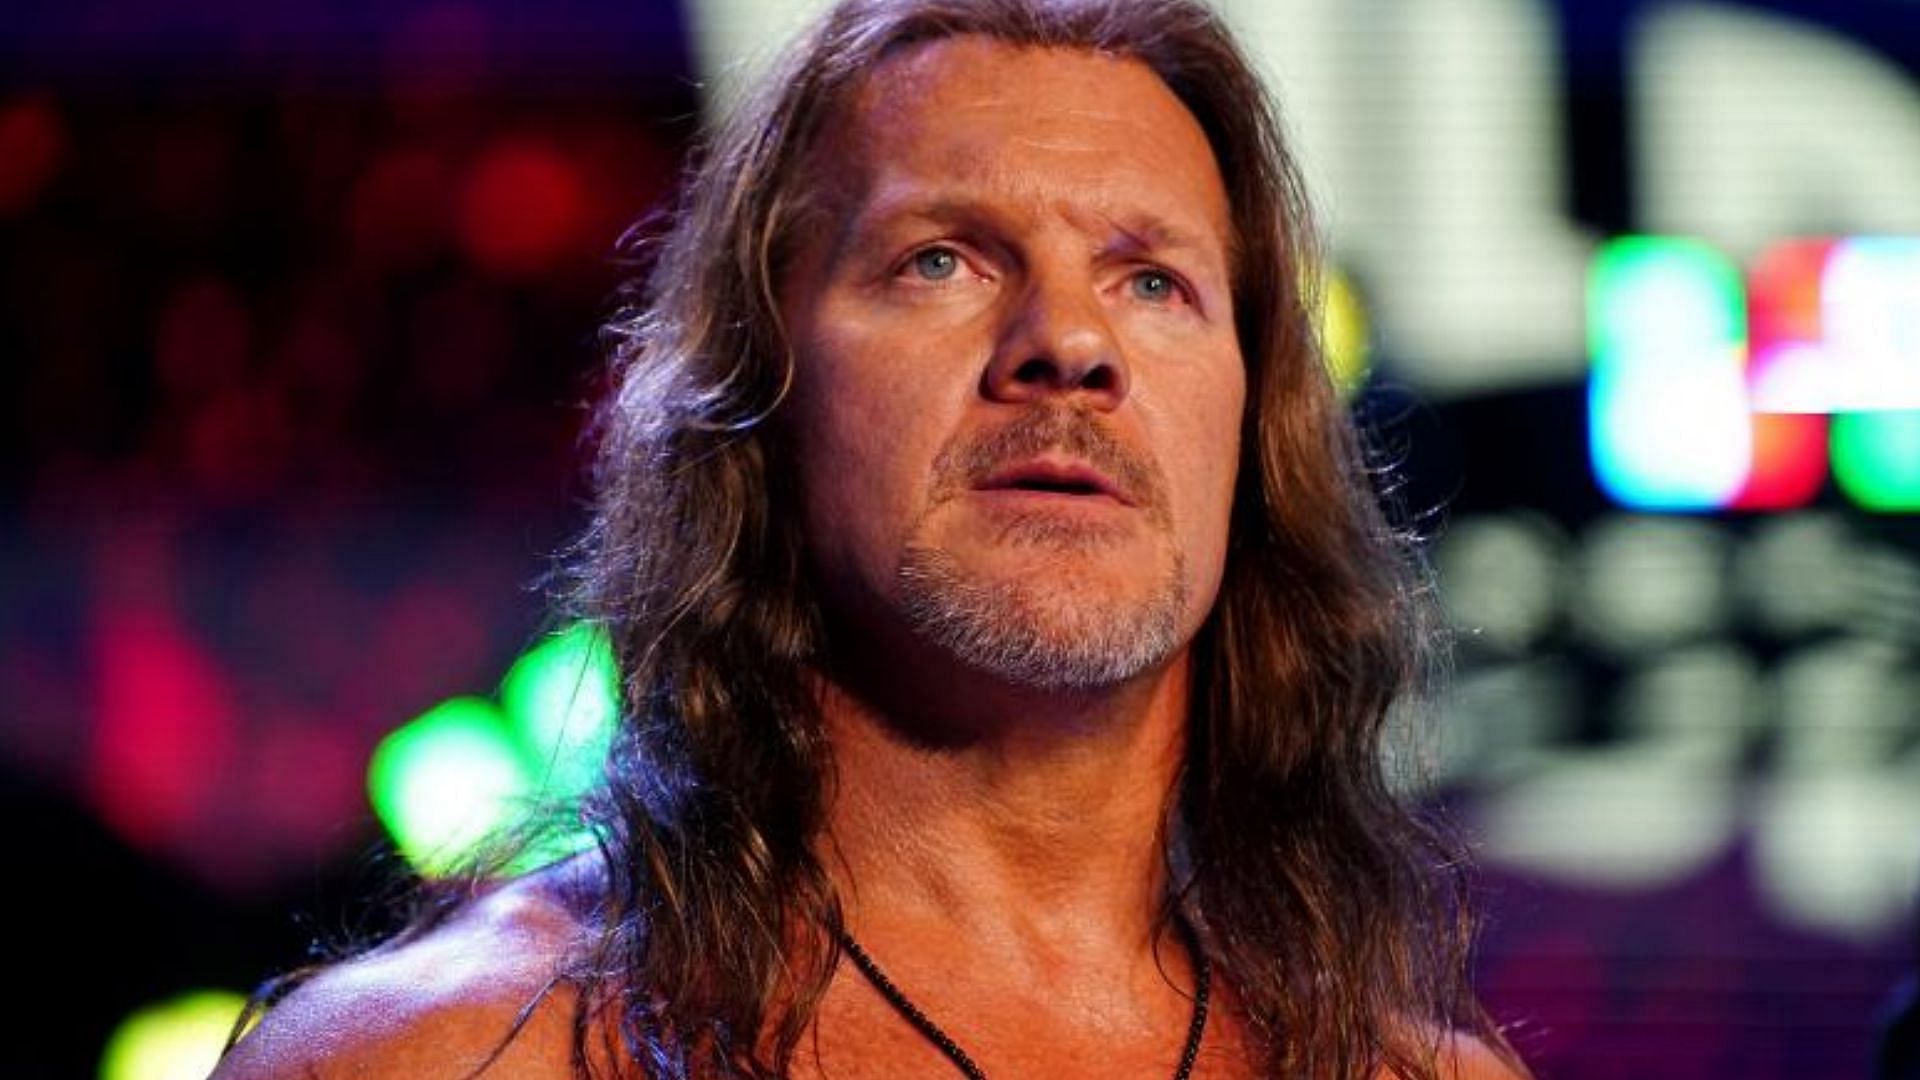 Chris Jericho was the inaugural AEW World Champion